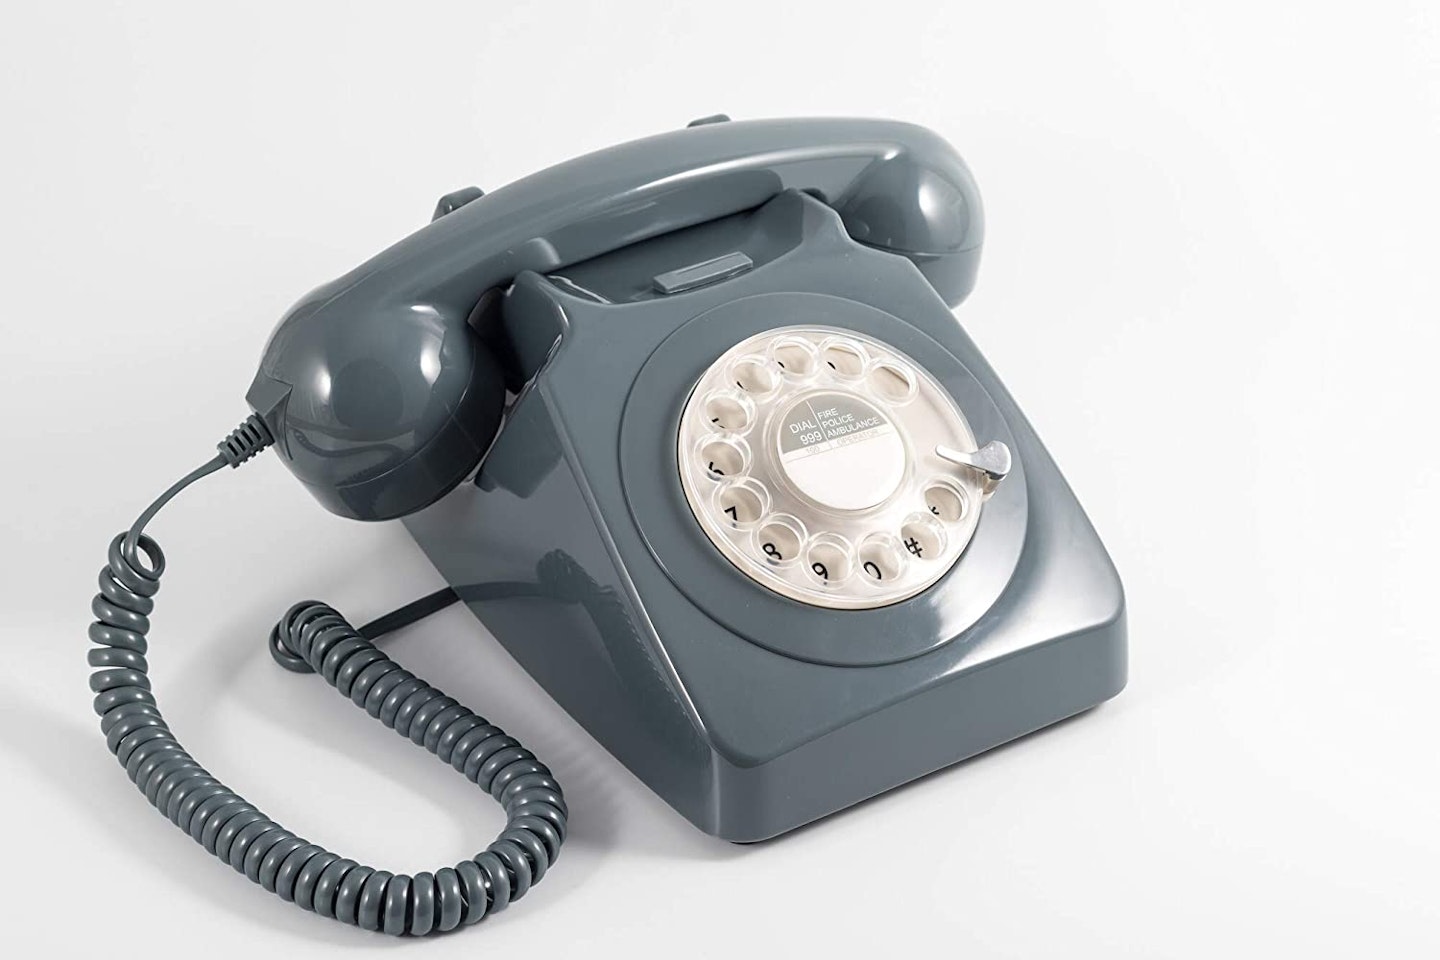 GPO 746 Rotary 1970s-style Retro Landline Phone